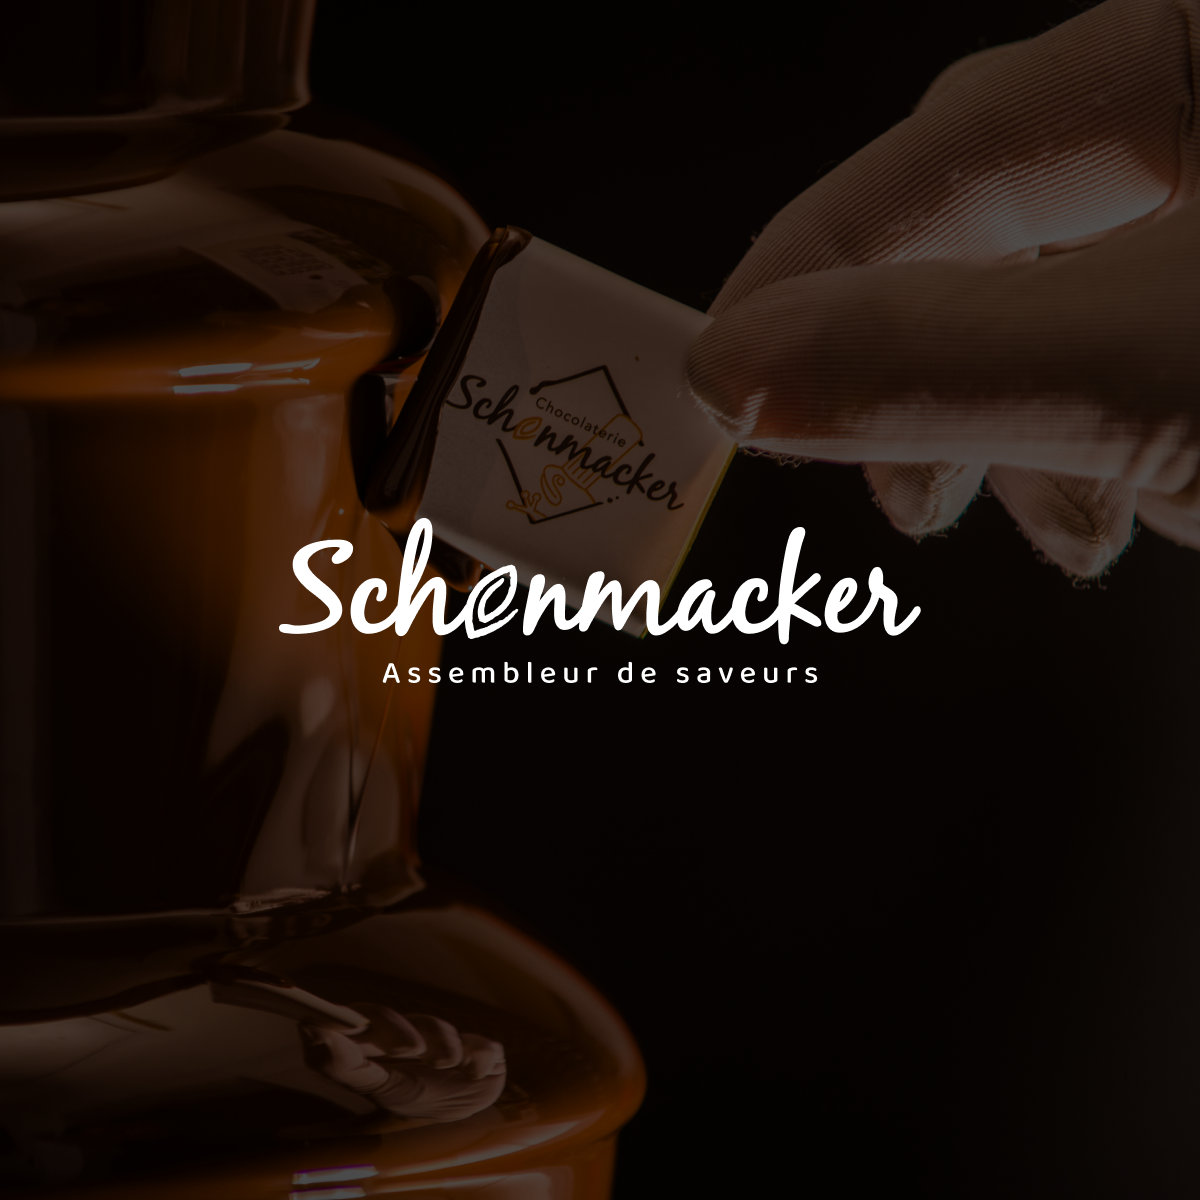 (c) Chocolaterie-schonmacker.be